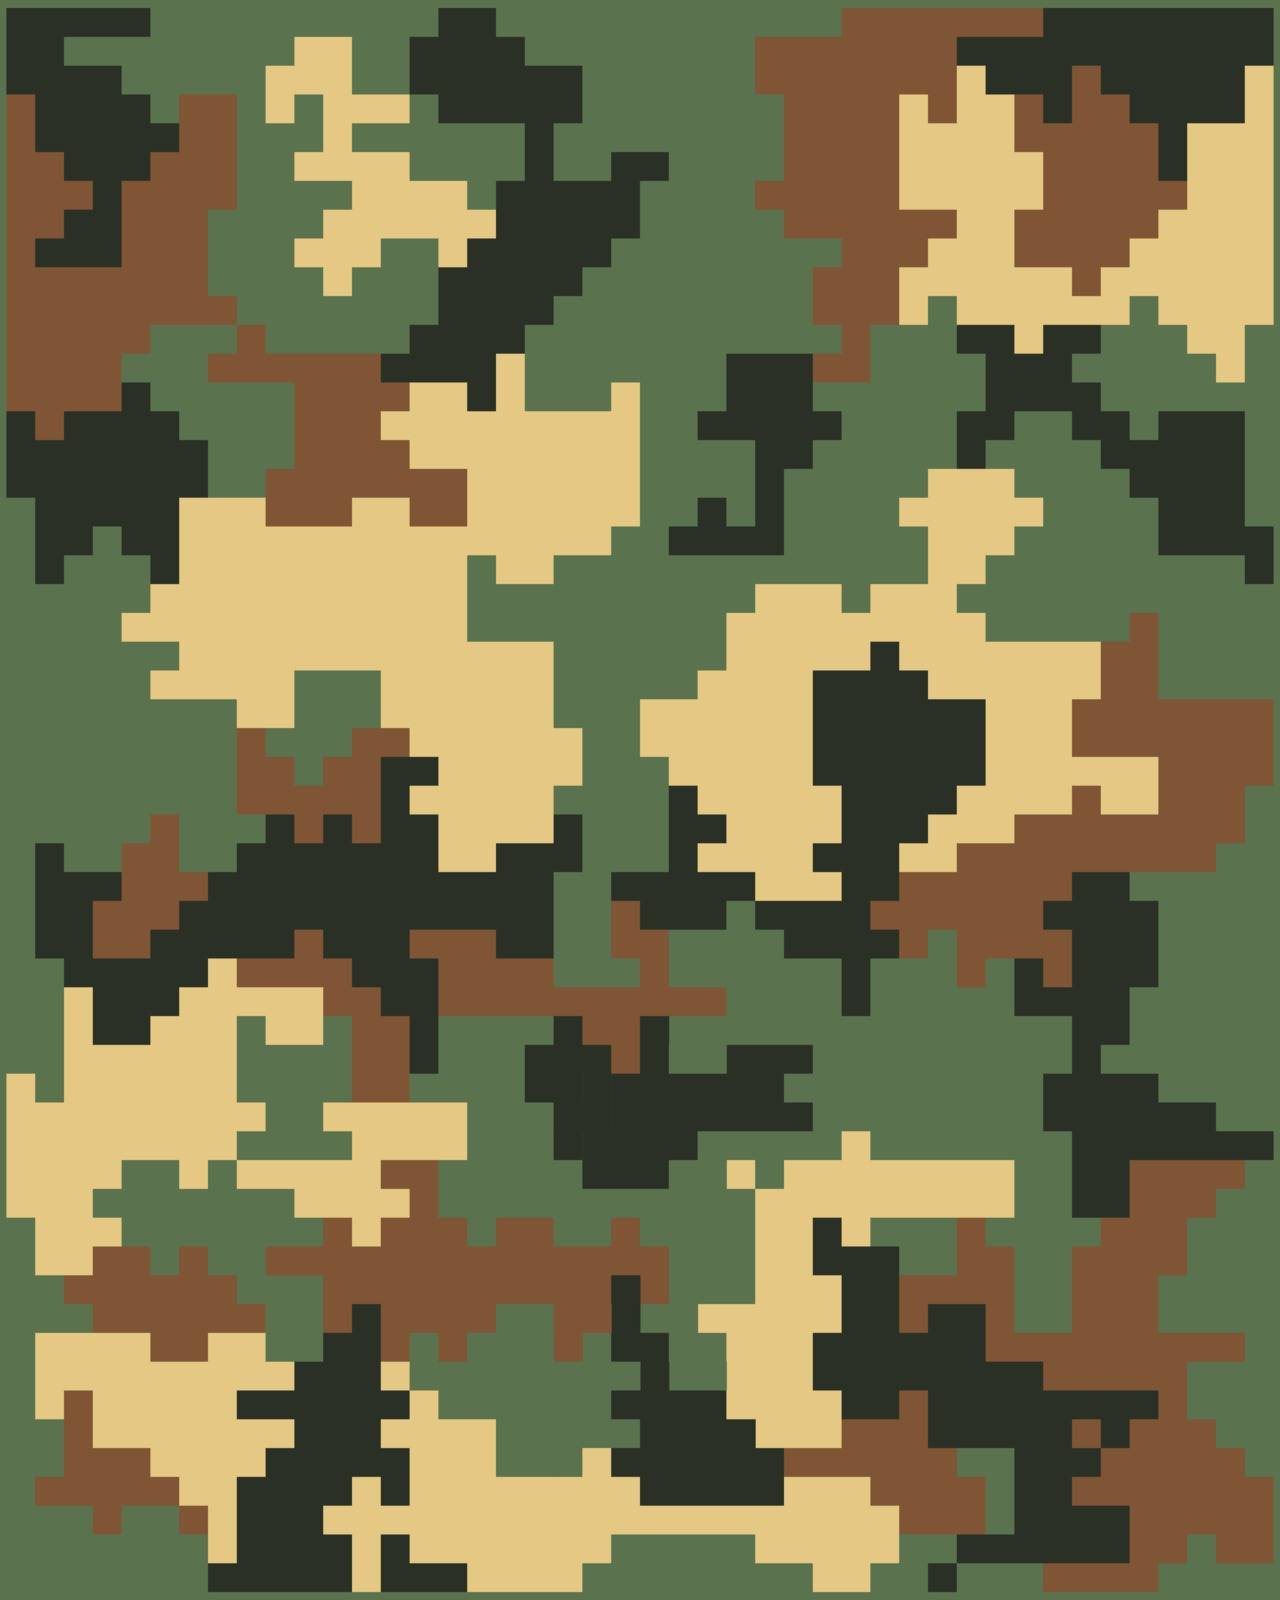 Digital camouflage by ratkomat